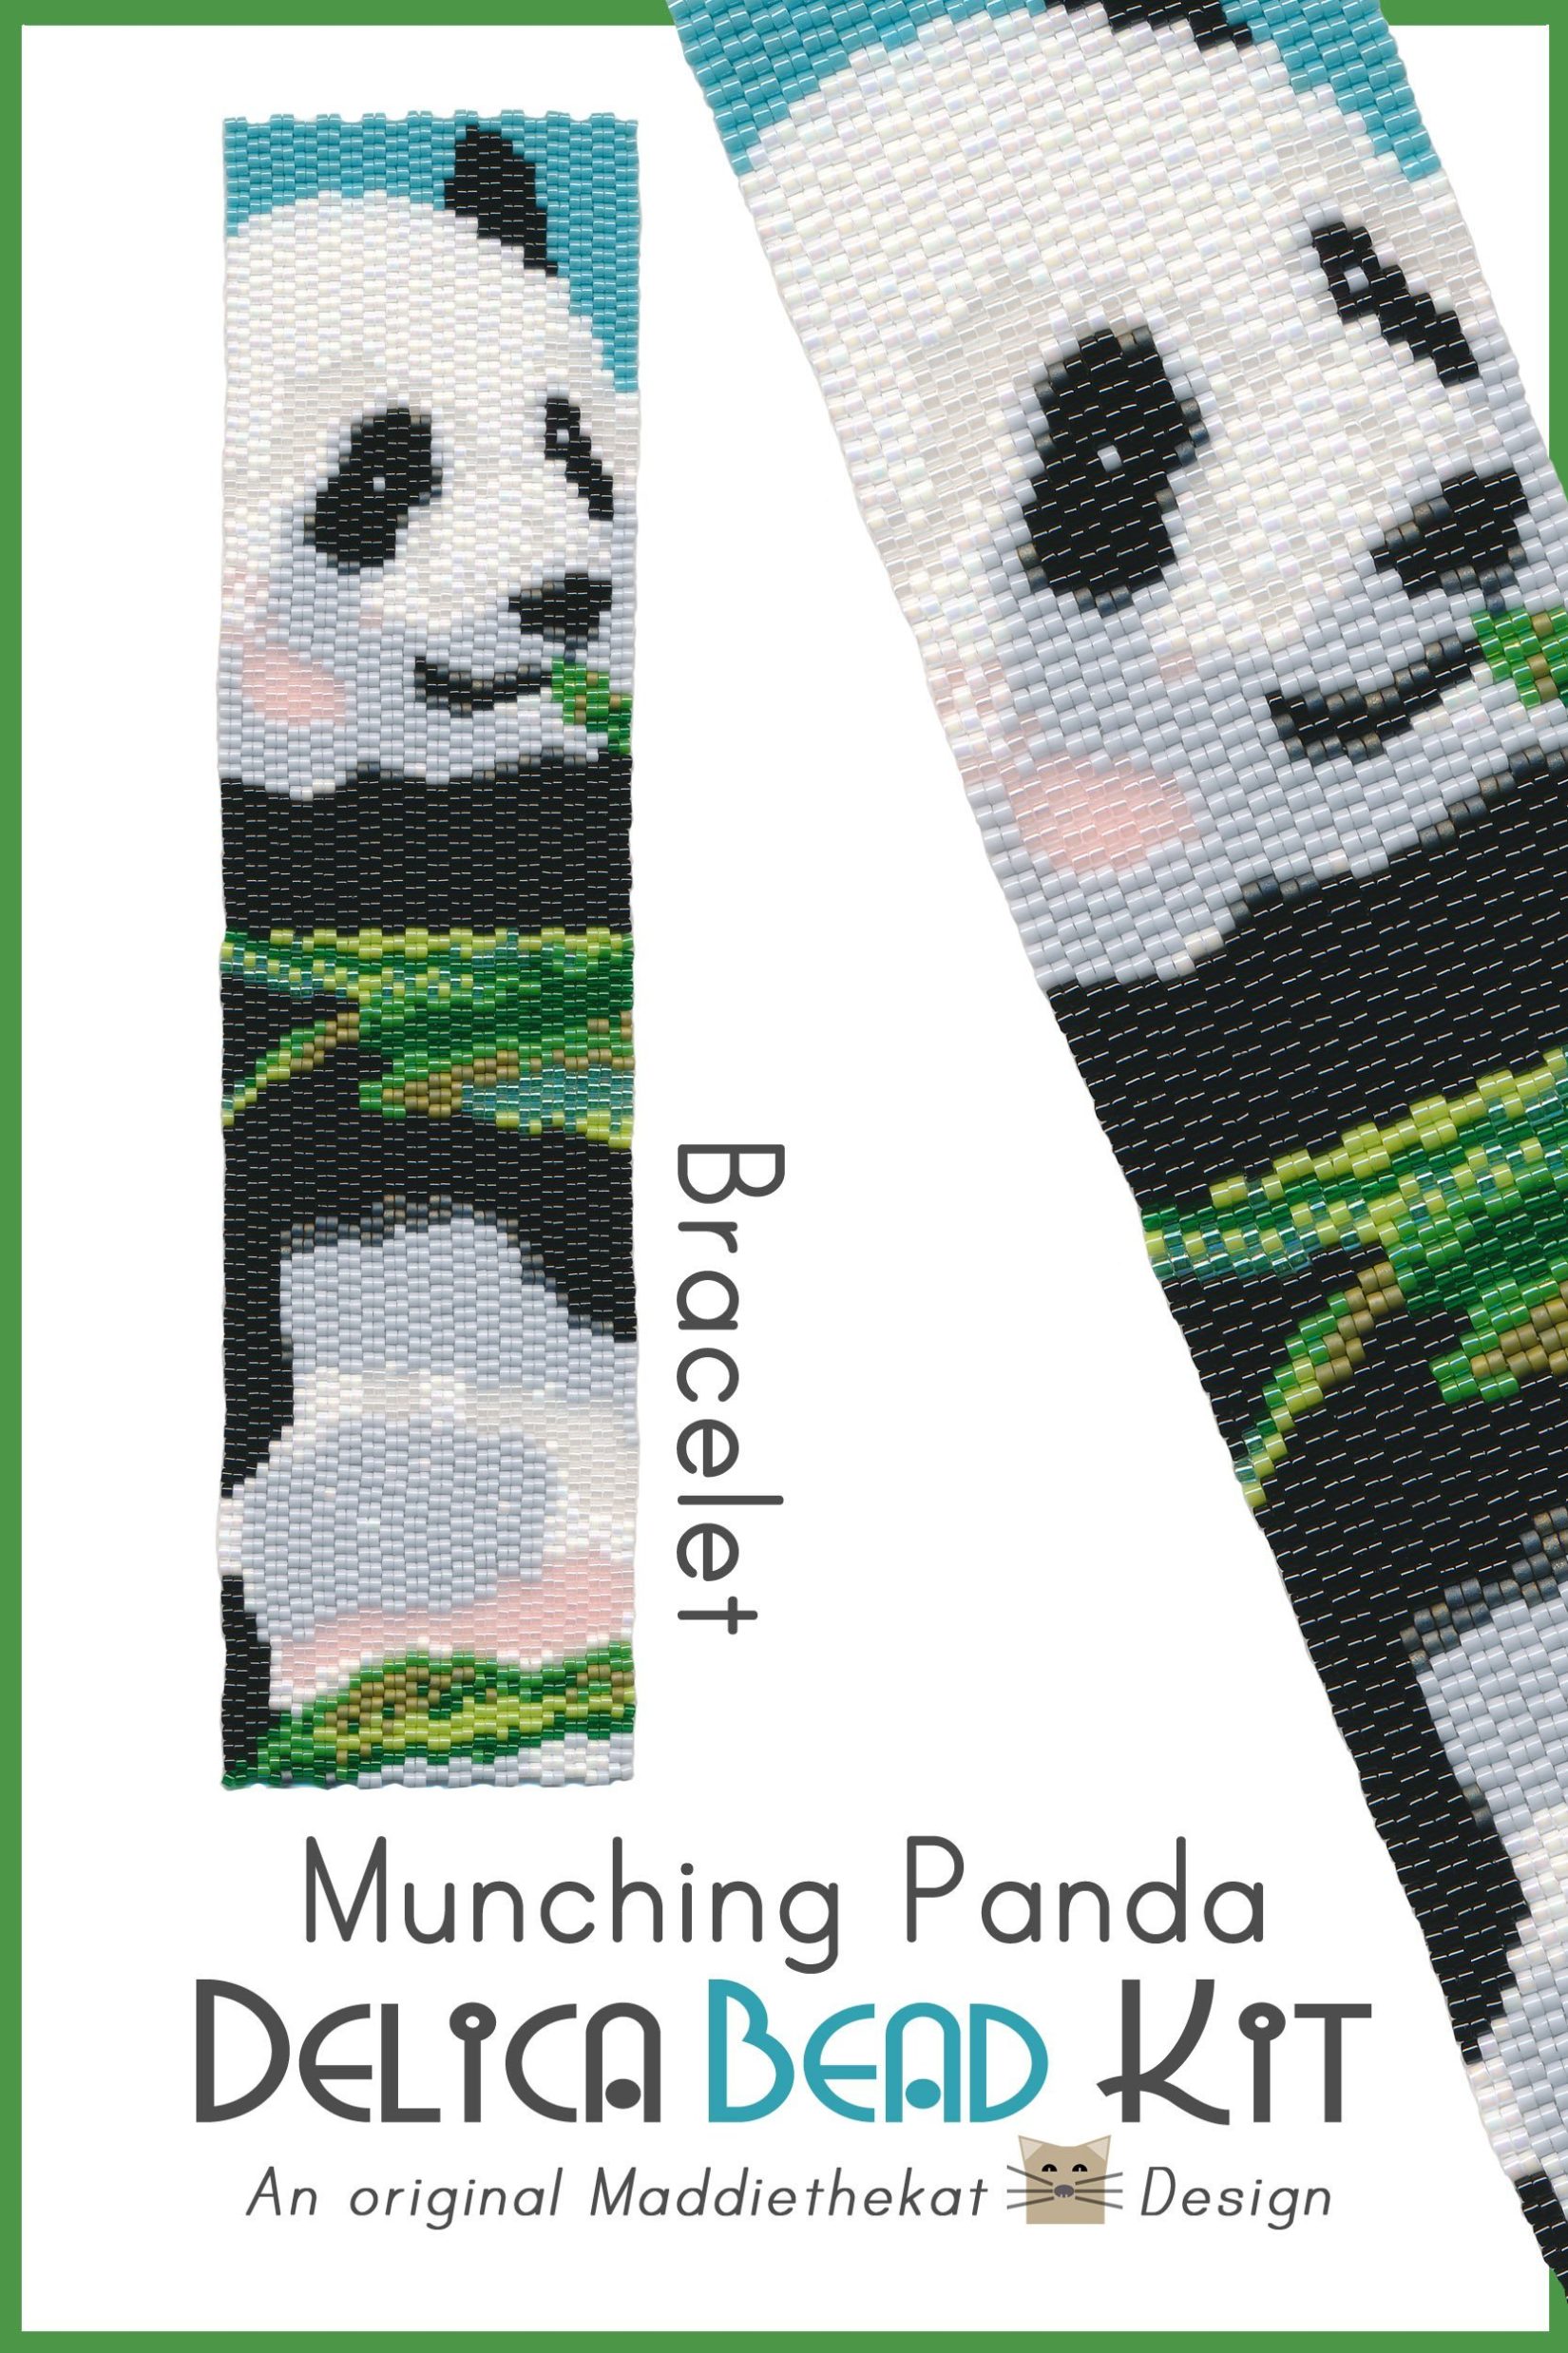 Munching Panda Wide Cuff Bracelet 2-Drop Peyote Bead Pattern or Bead Kit